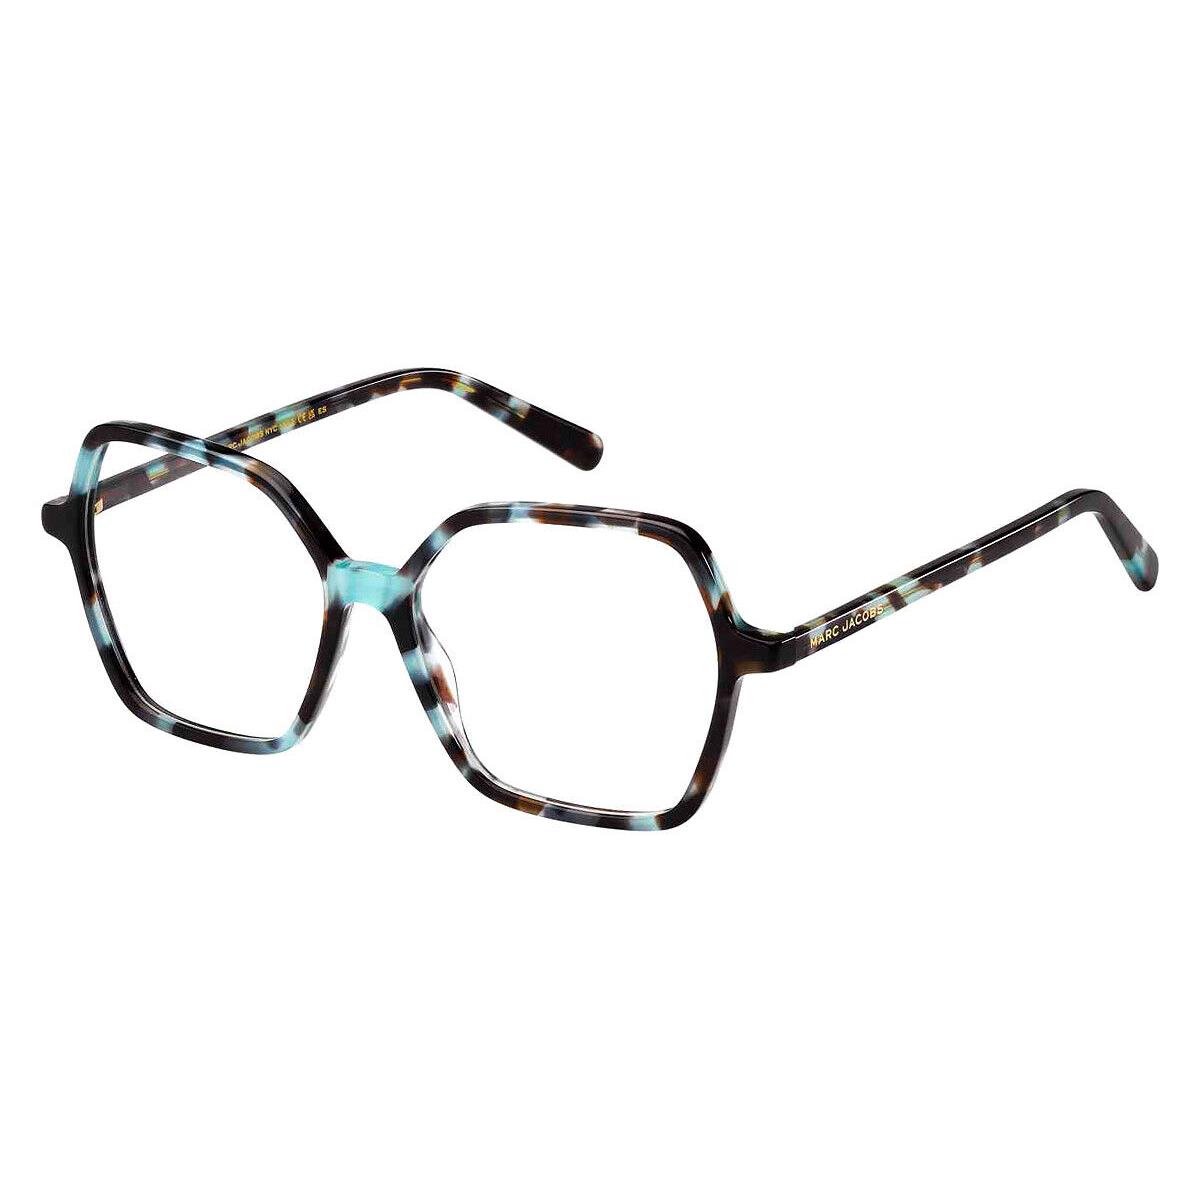 Marc Jacobs Mjb Eyeglasses Women Havana Teal 54mm